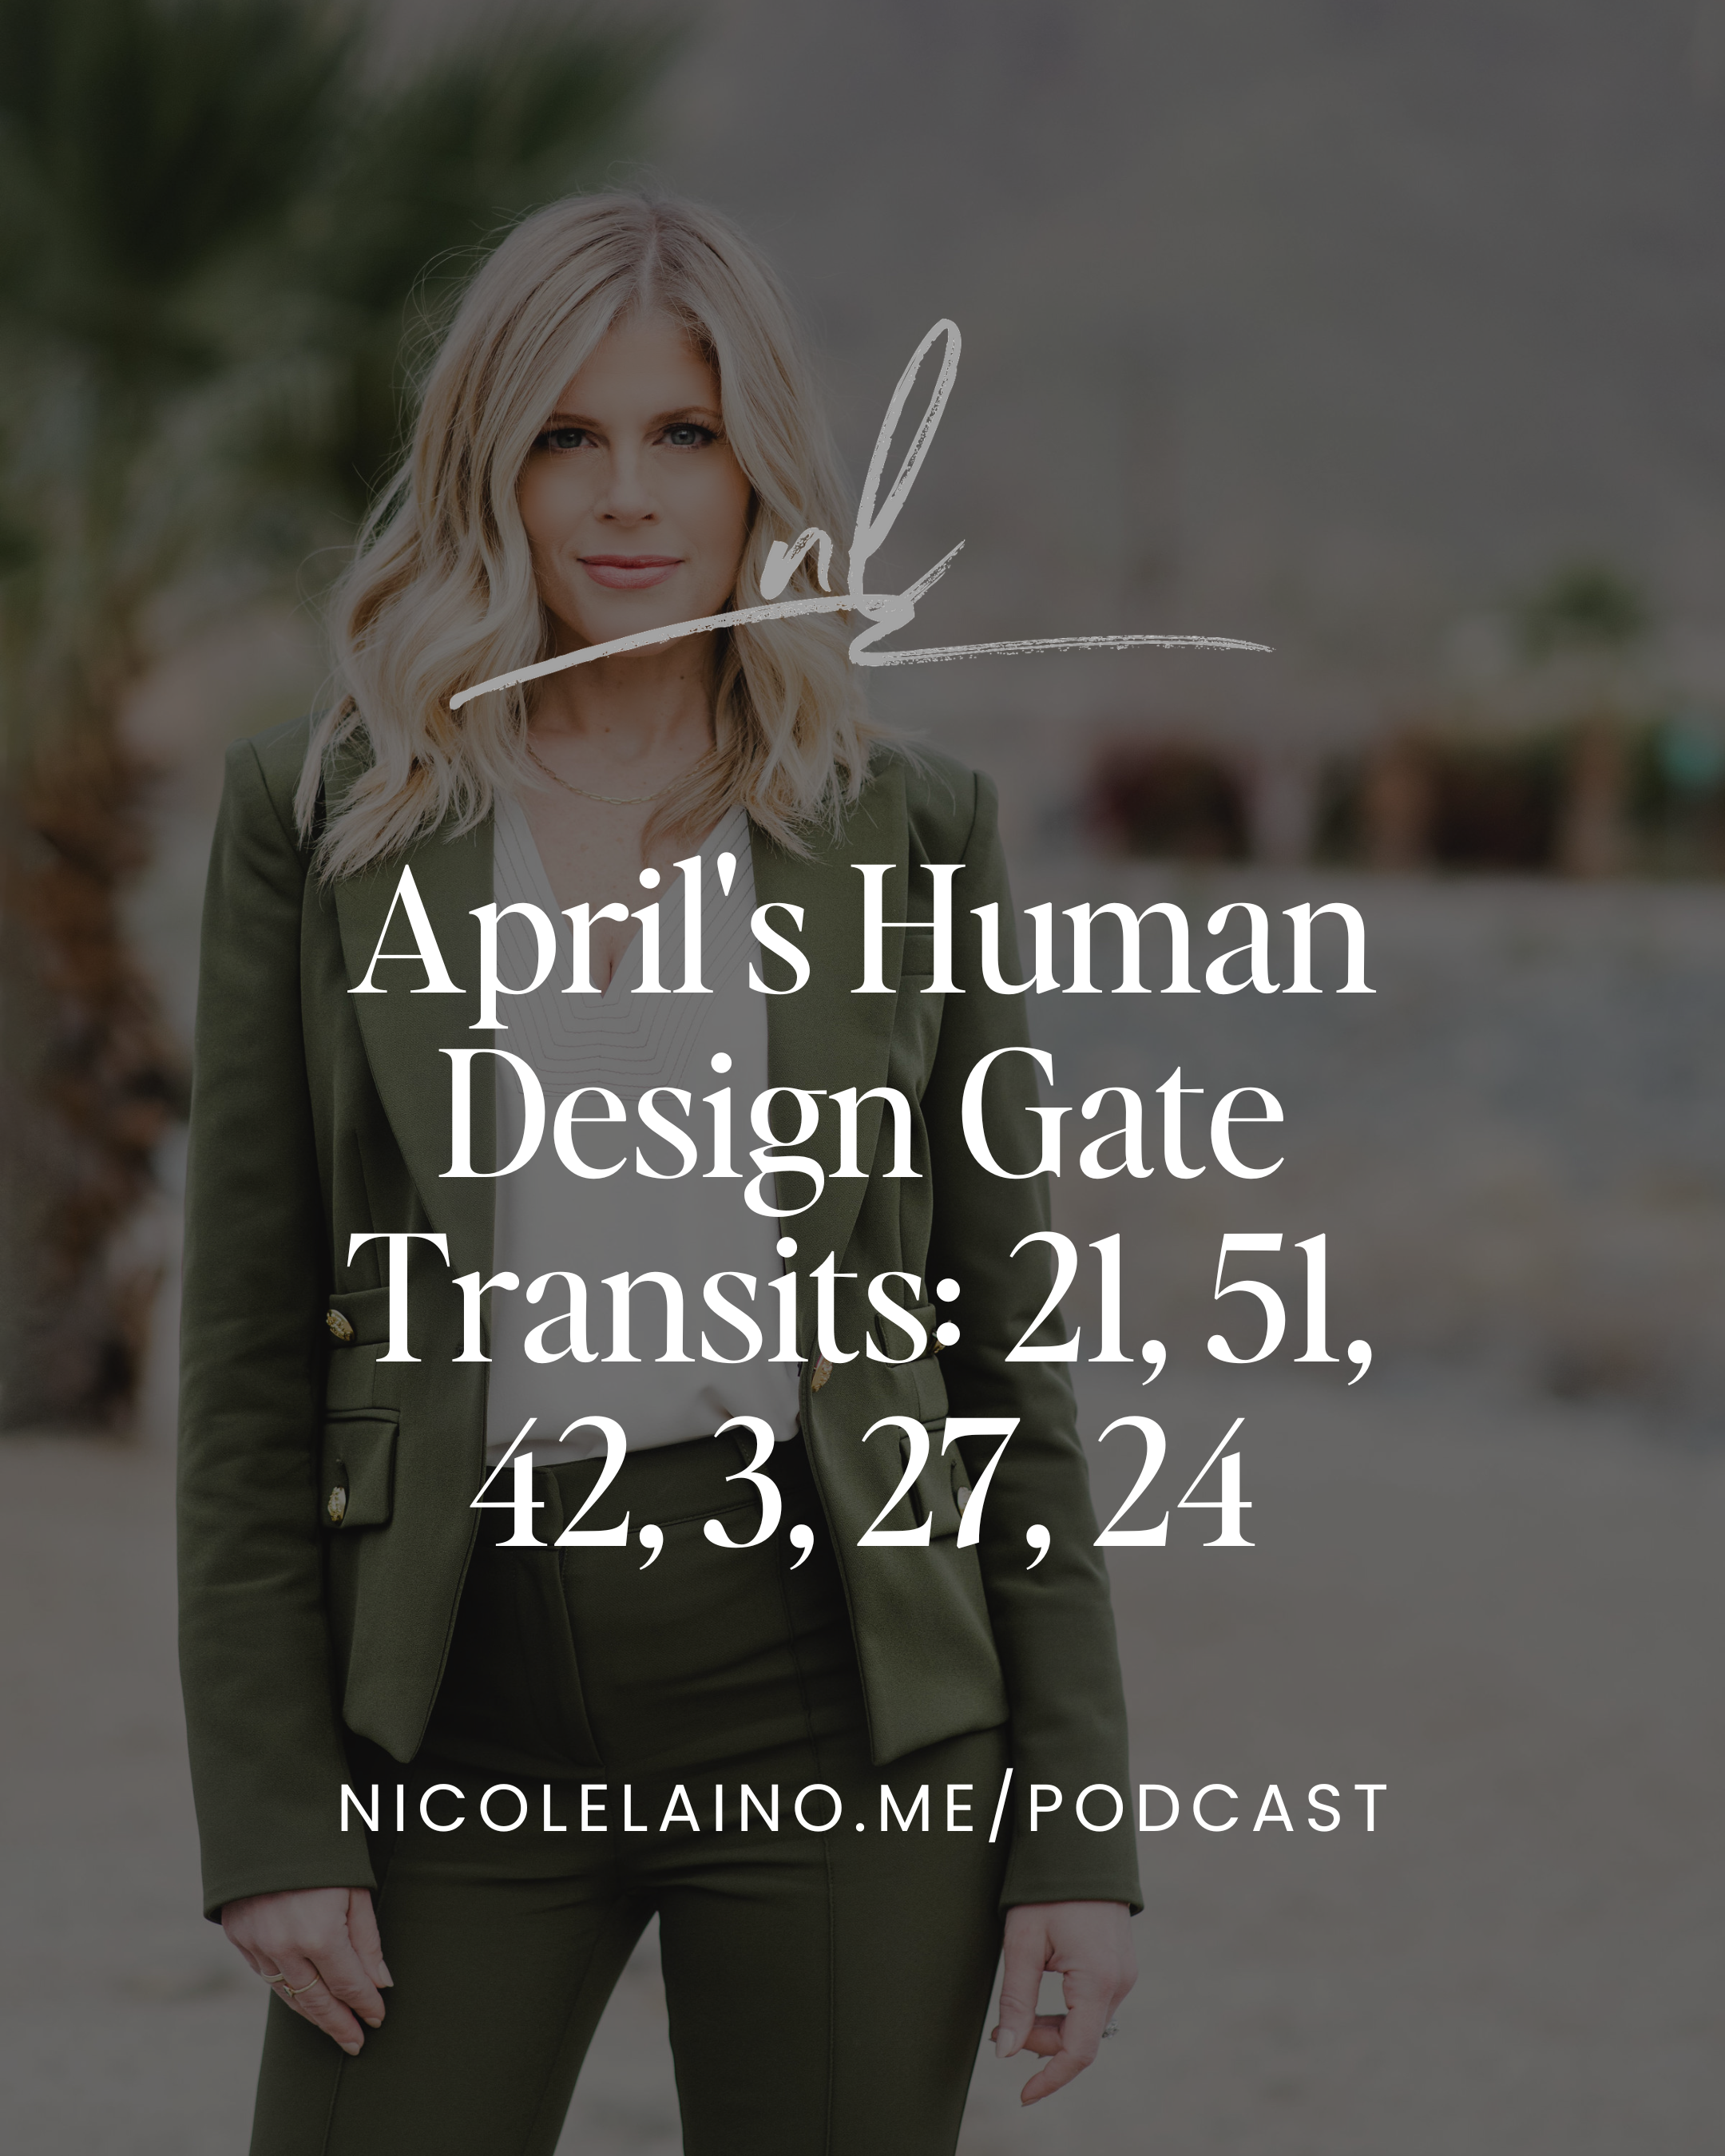 April's Human Design Gate Transits: 21, 51, 42, 3, 27, 24